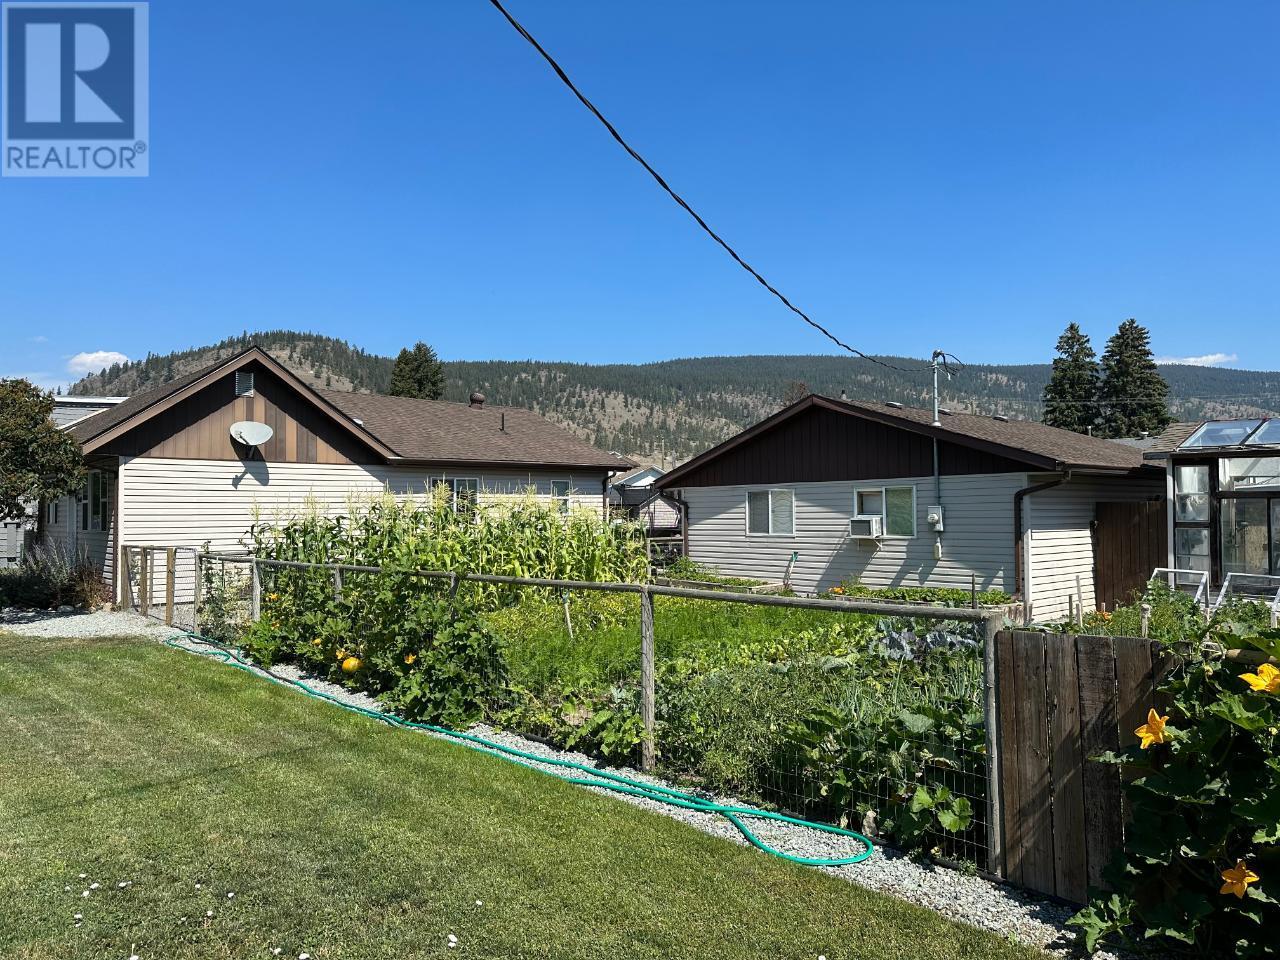 












1643 CANFORD AVE

,
Merritt,




British Columbia
V1K1B8

